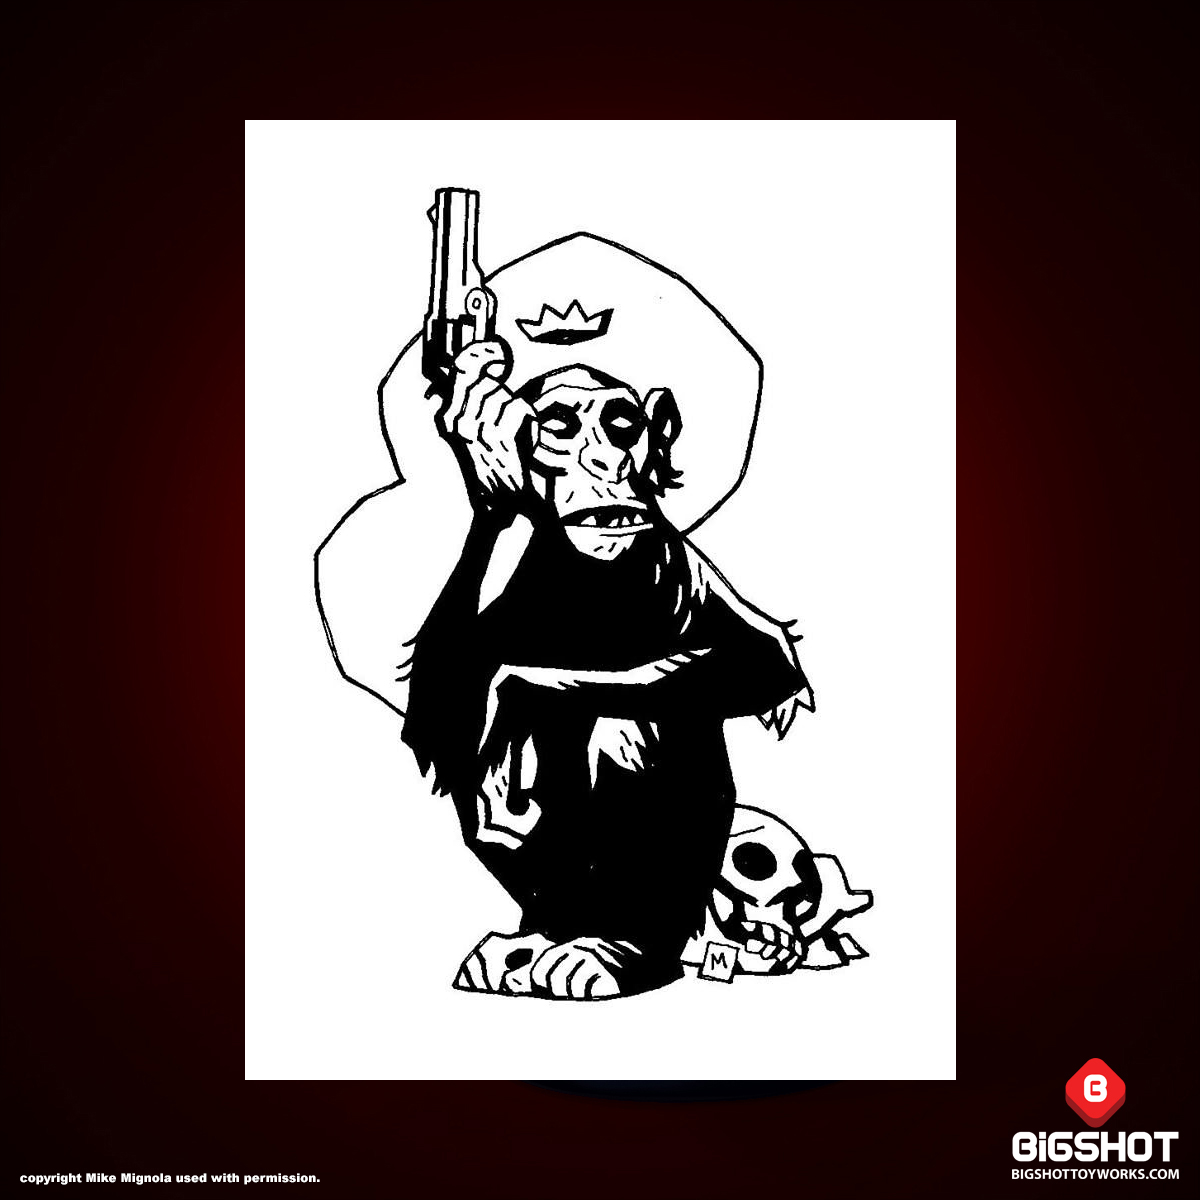 Mignole-Monkey-with-a-gun-illustration.jpg